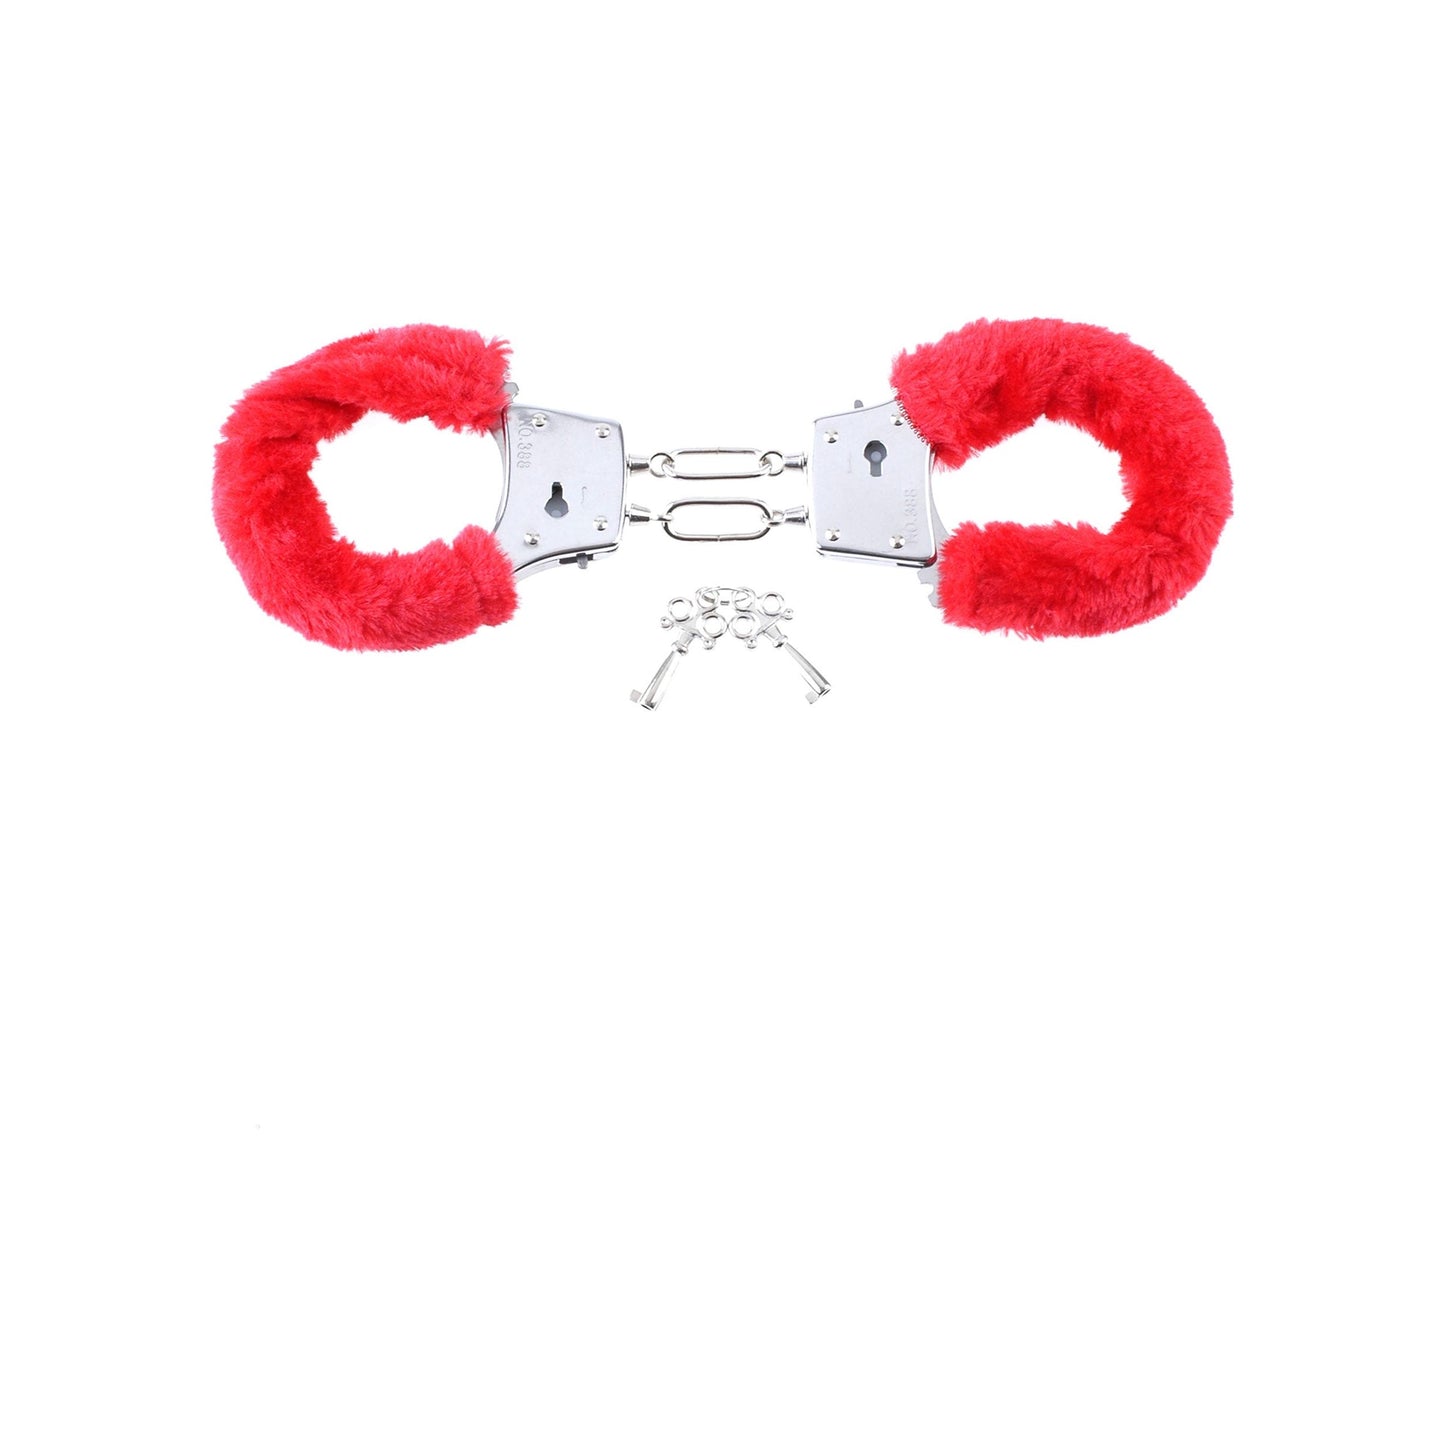 Beginner's Red Furry Cuffs - Bondage Gear Online - My Temptations